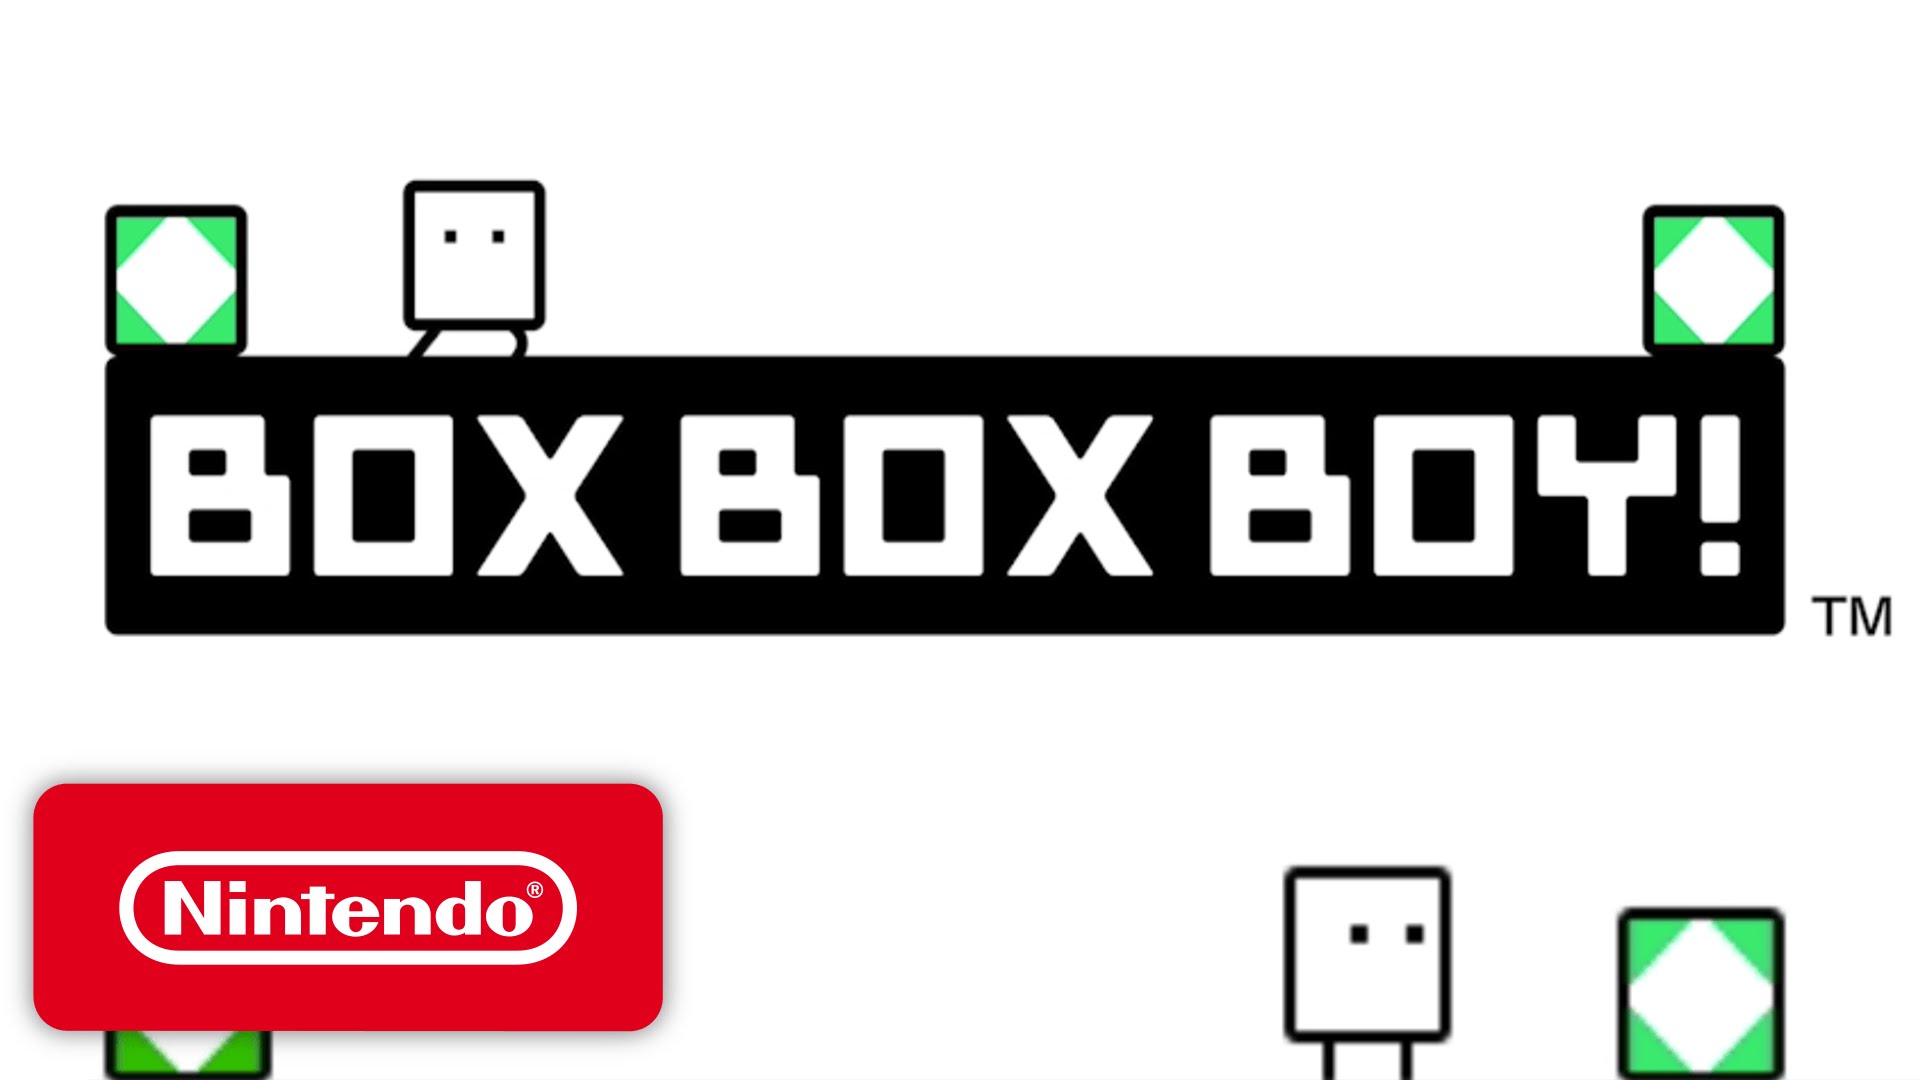 BOXBOXBOY! - Gameplay Trailer